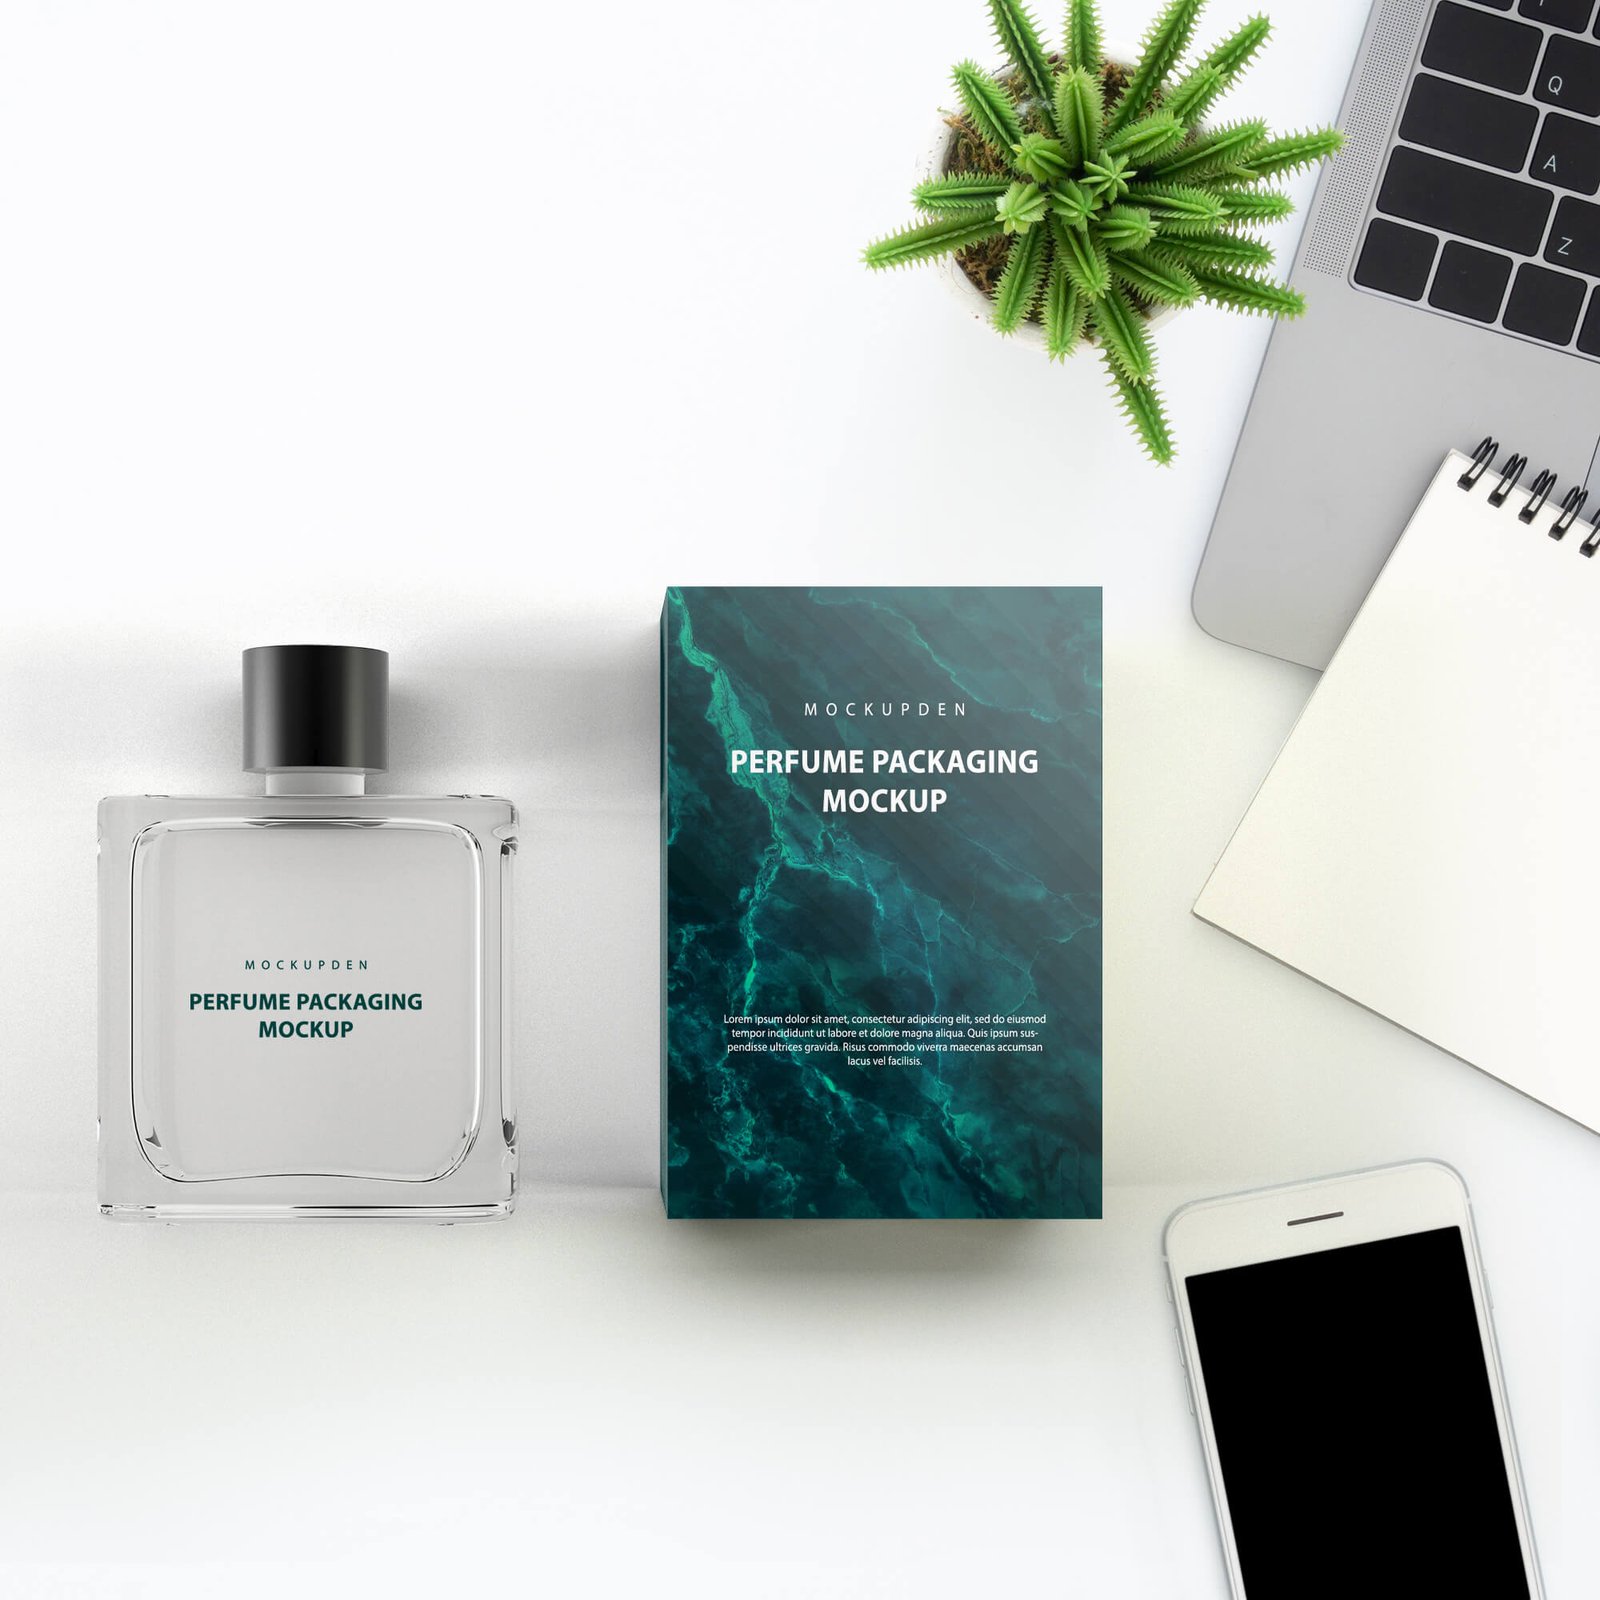 Free Perfume Packaging Mockup PSD Template